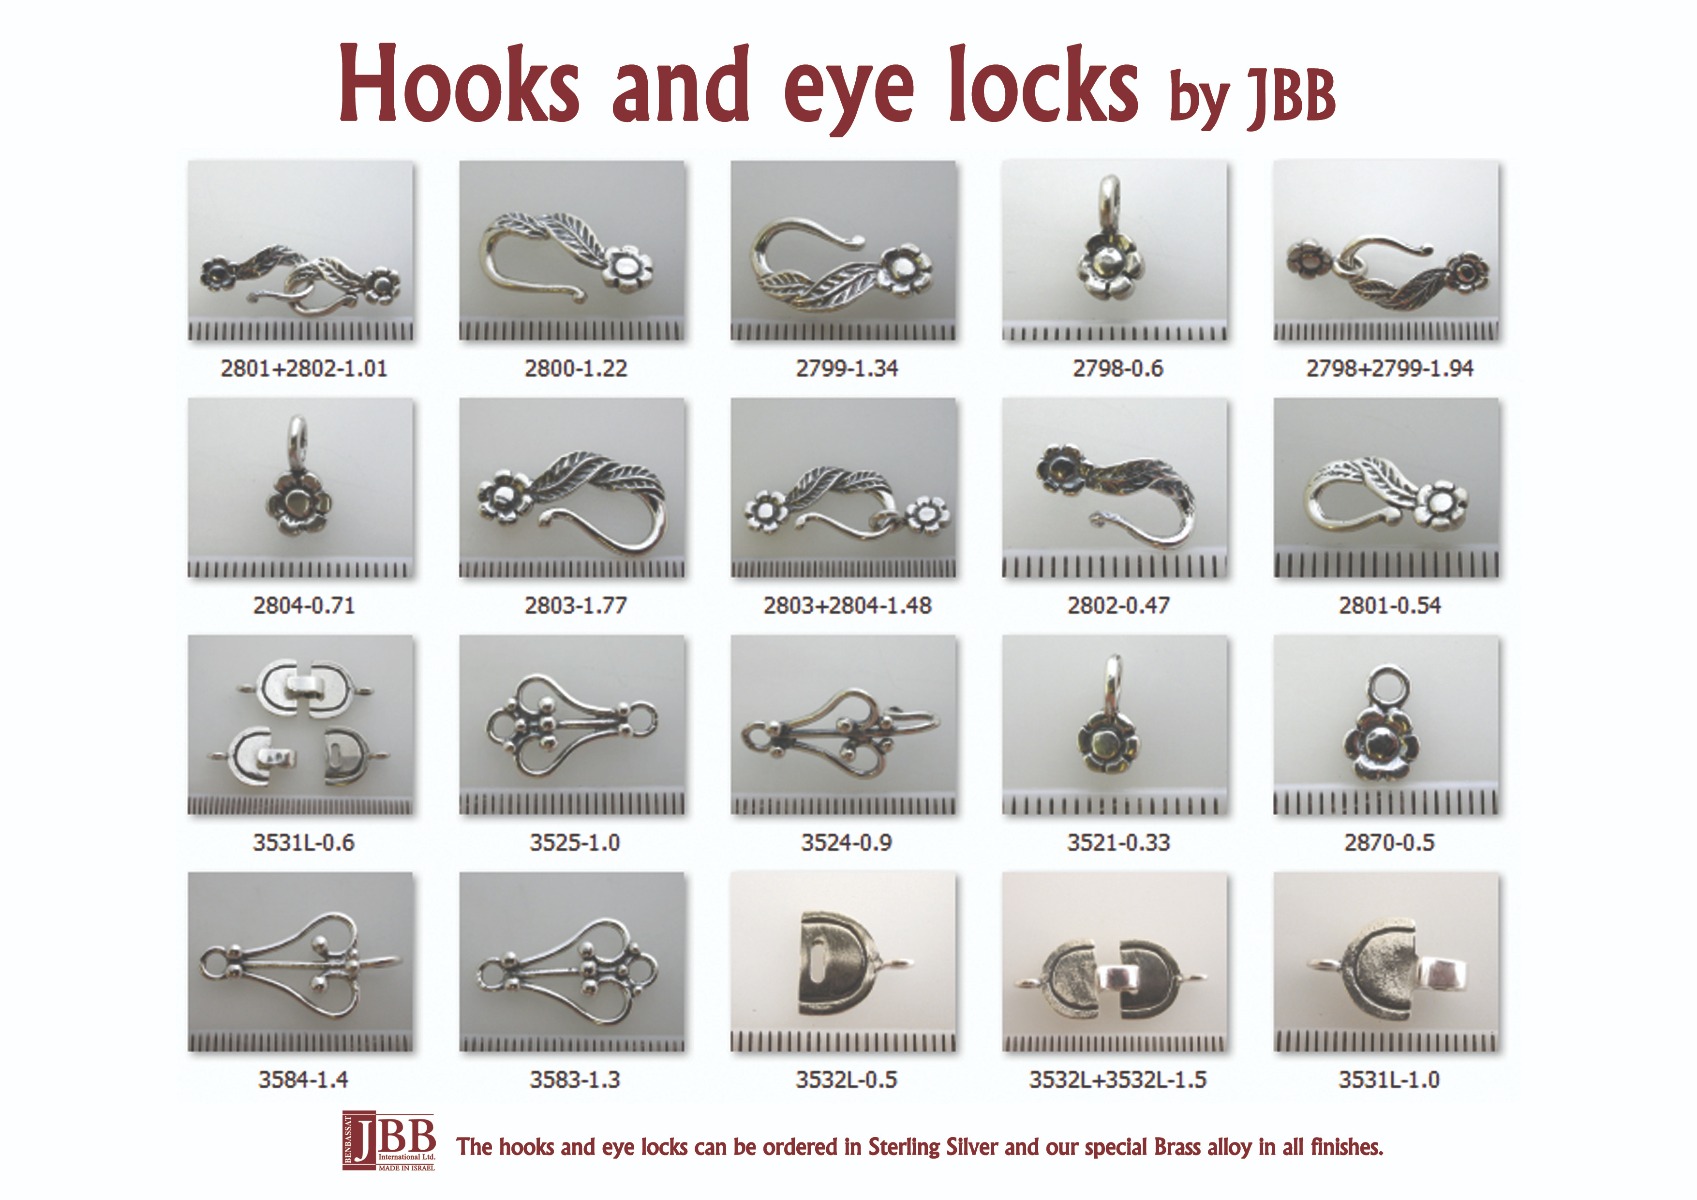 Hooks and Eye locks